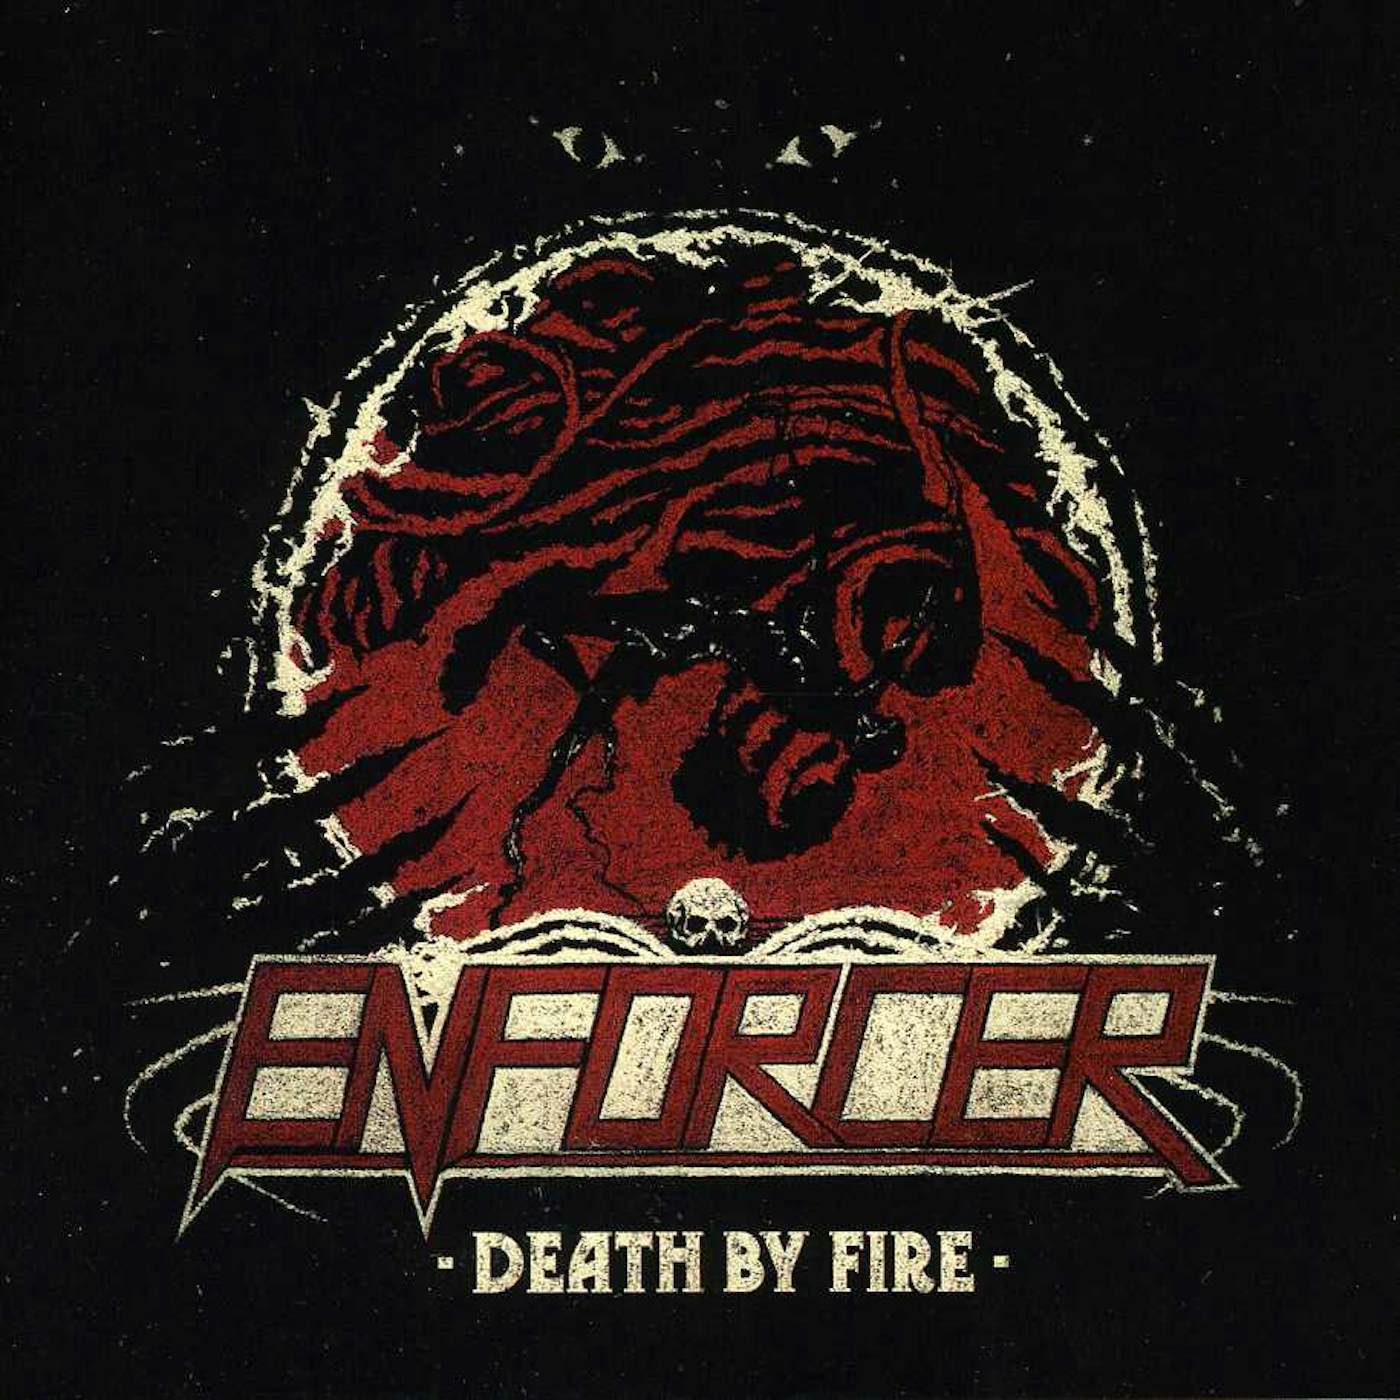 Enforcer DEATH BY FIRE CD